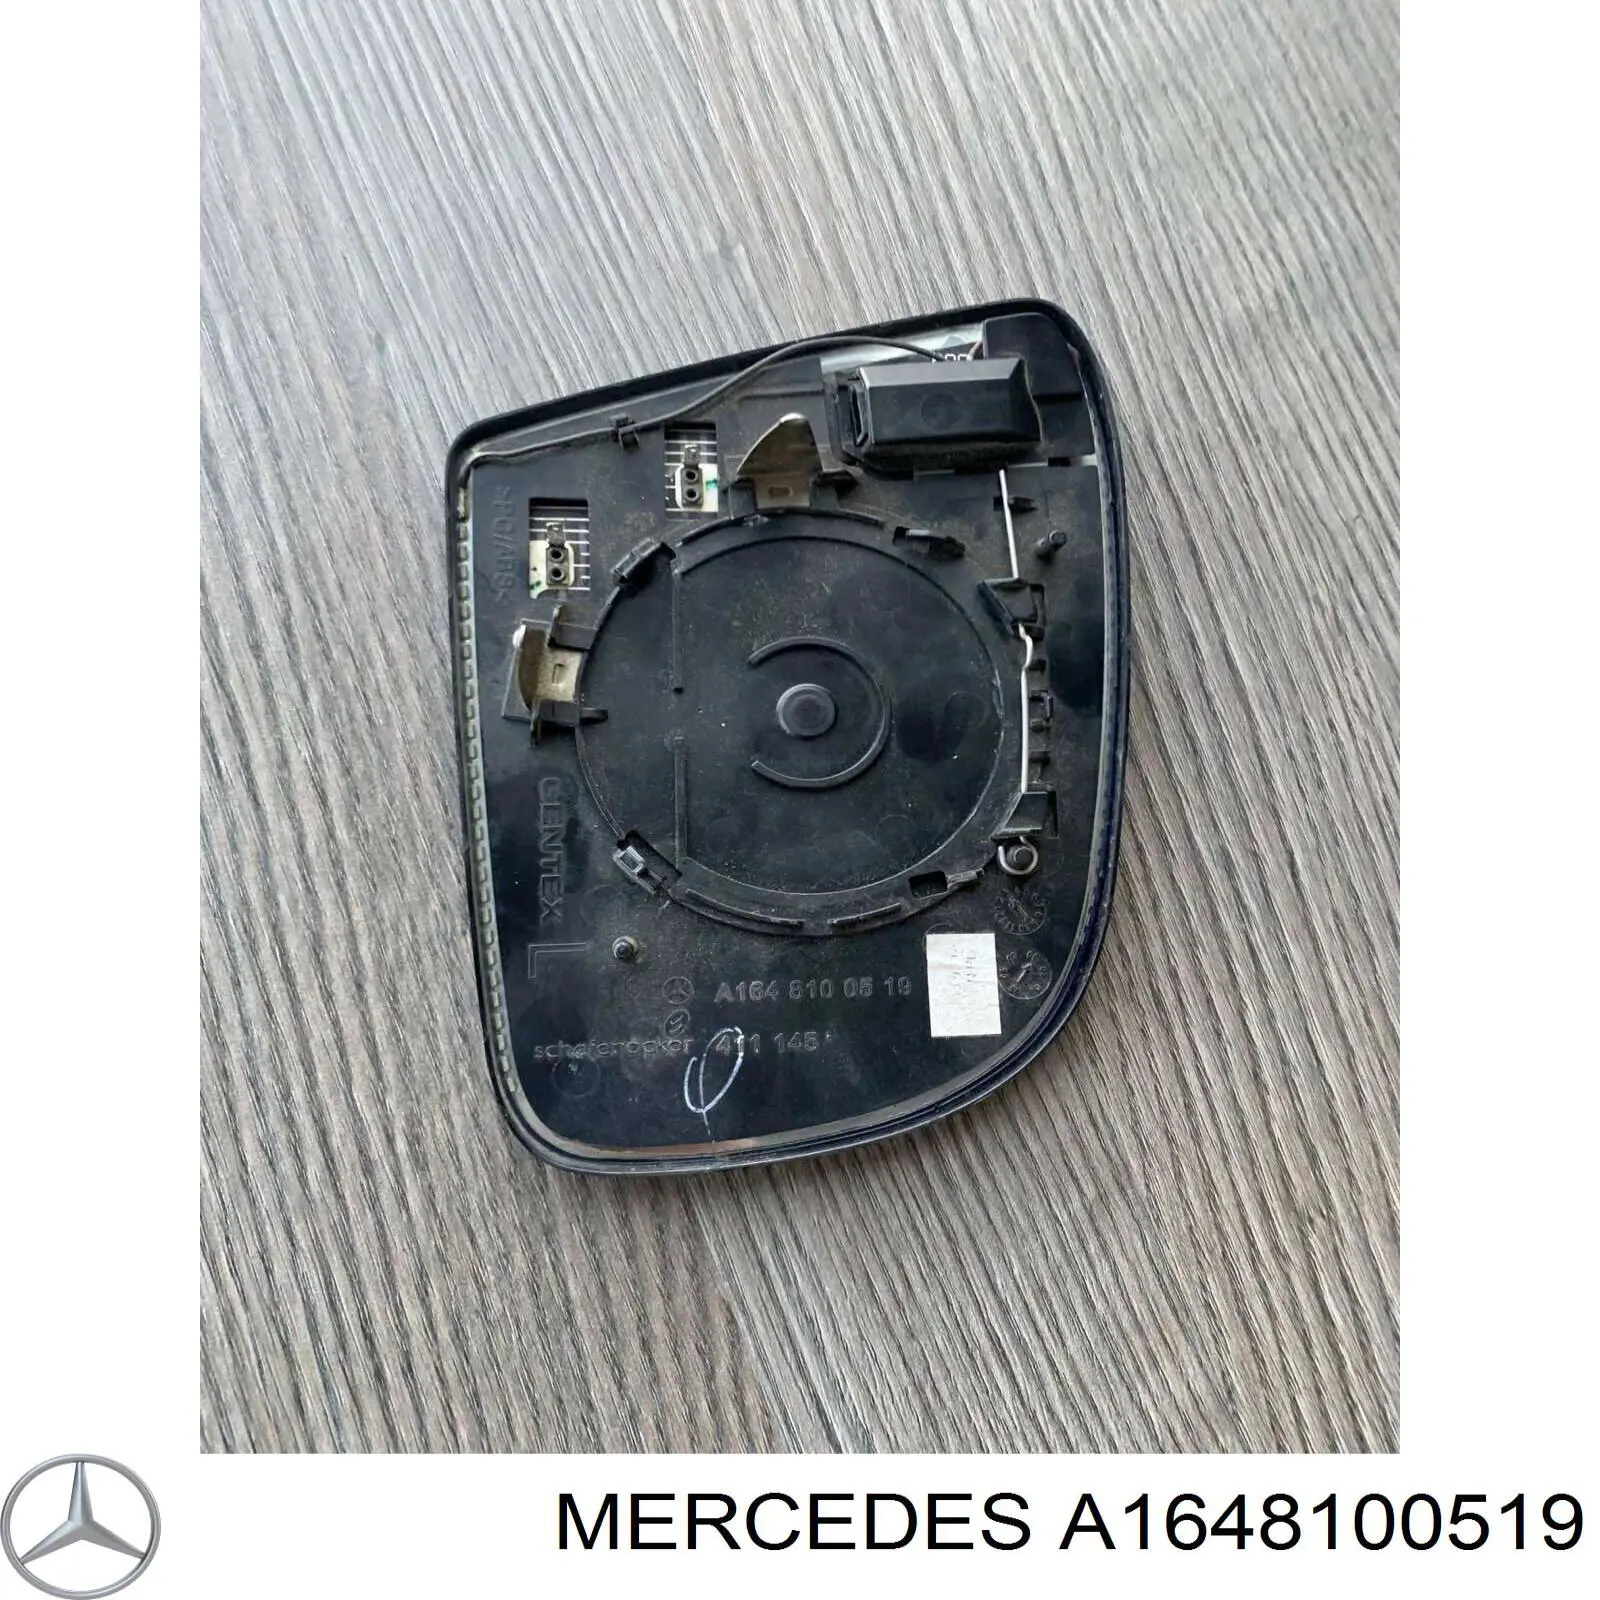 A1648100519 Mercedes